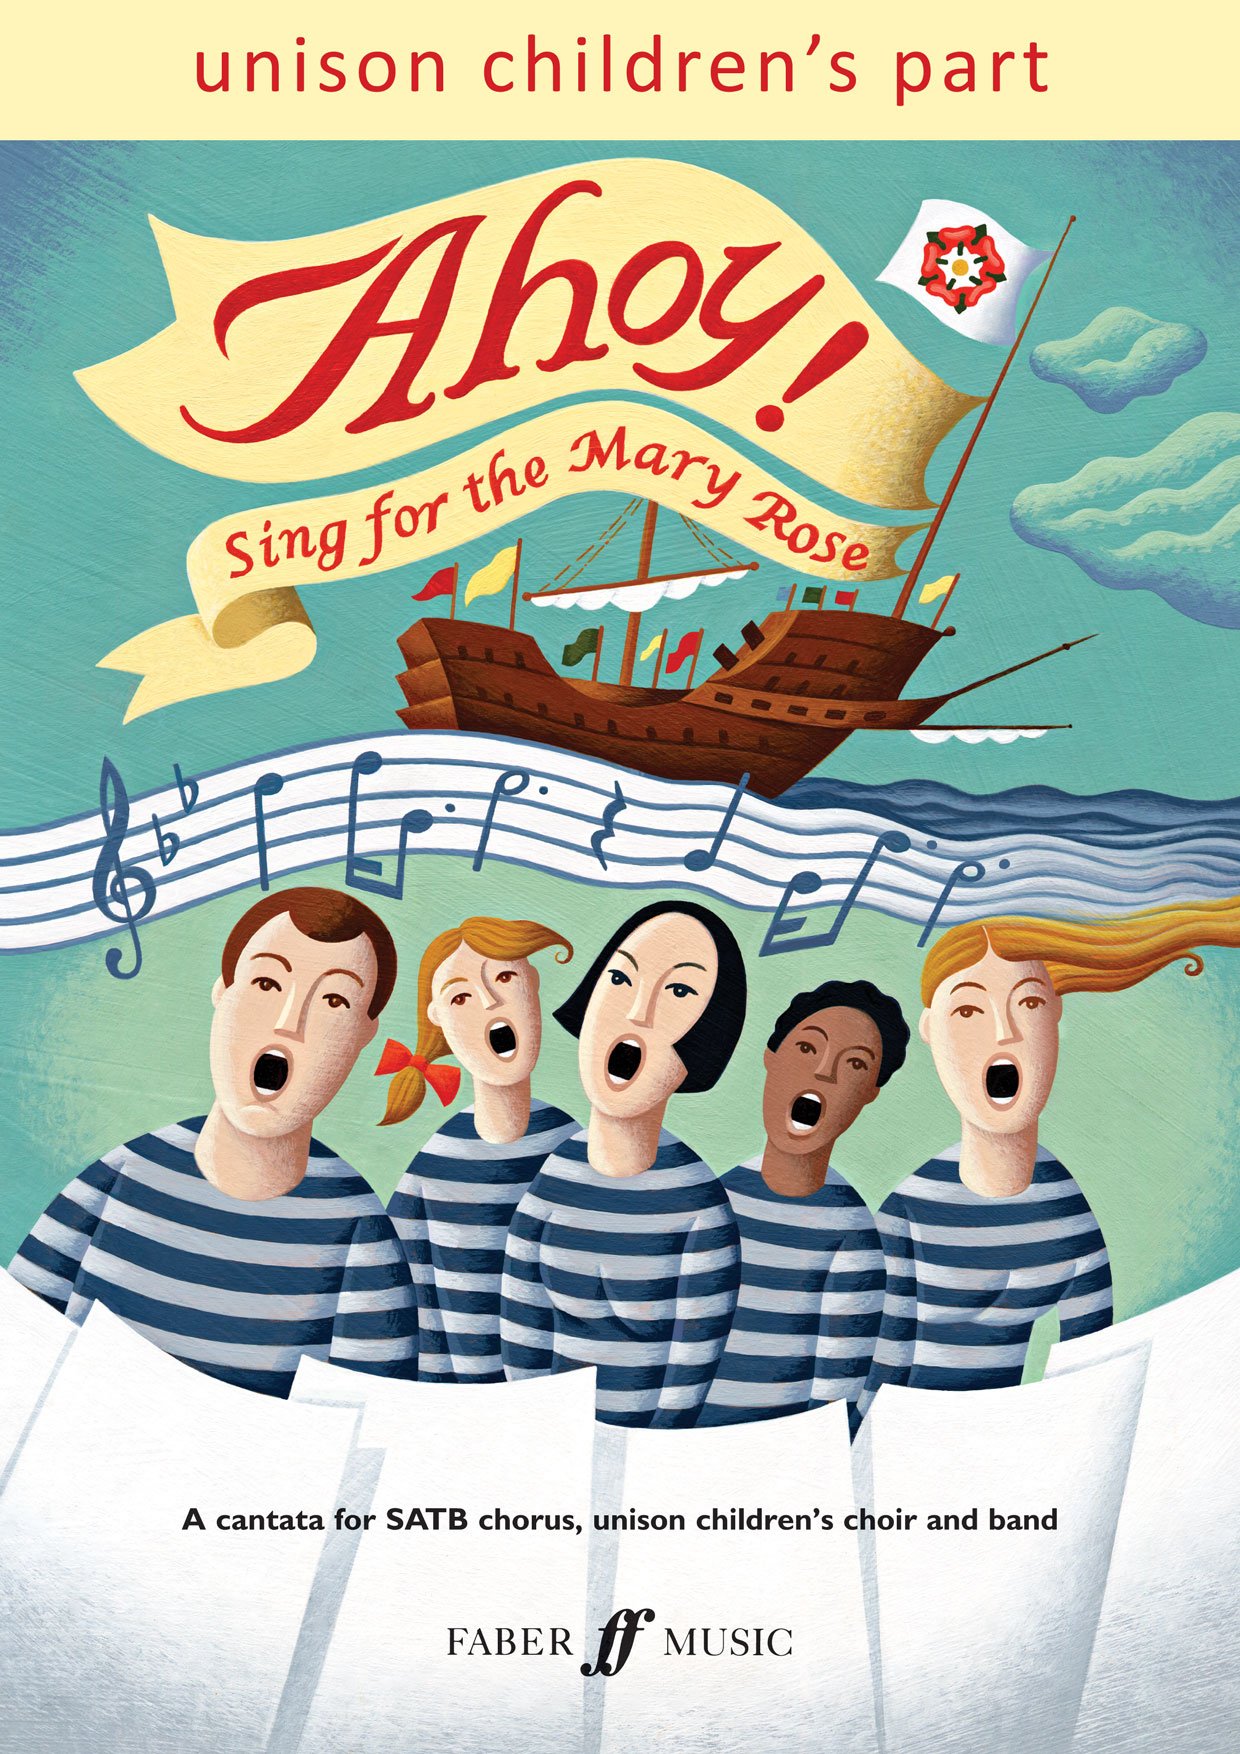 Ahoy-Children's-part COVER.jpg